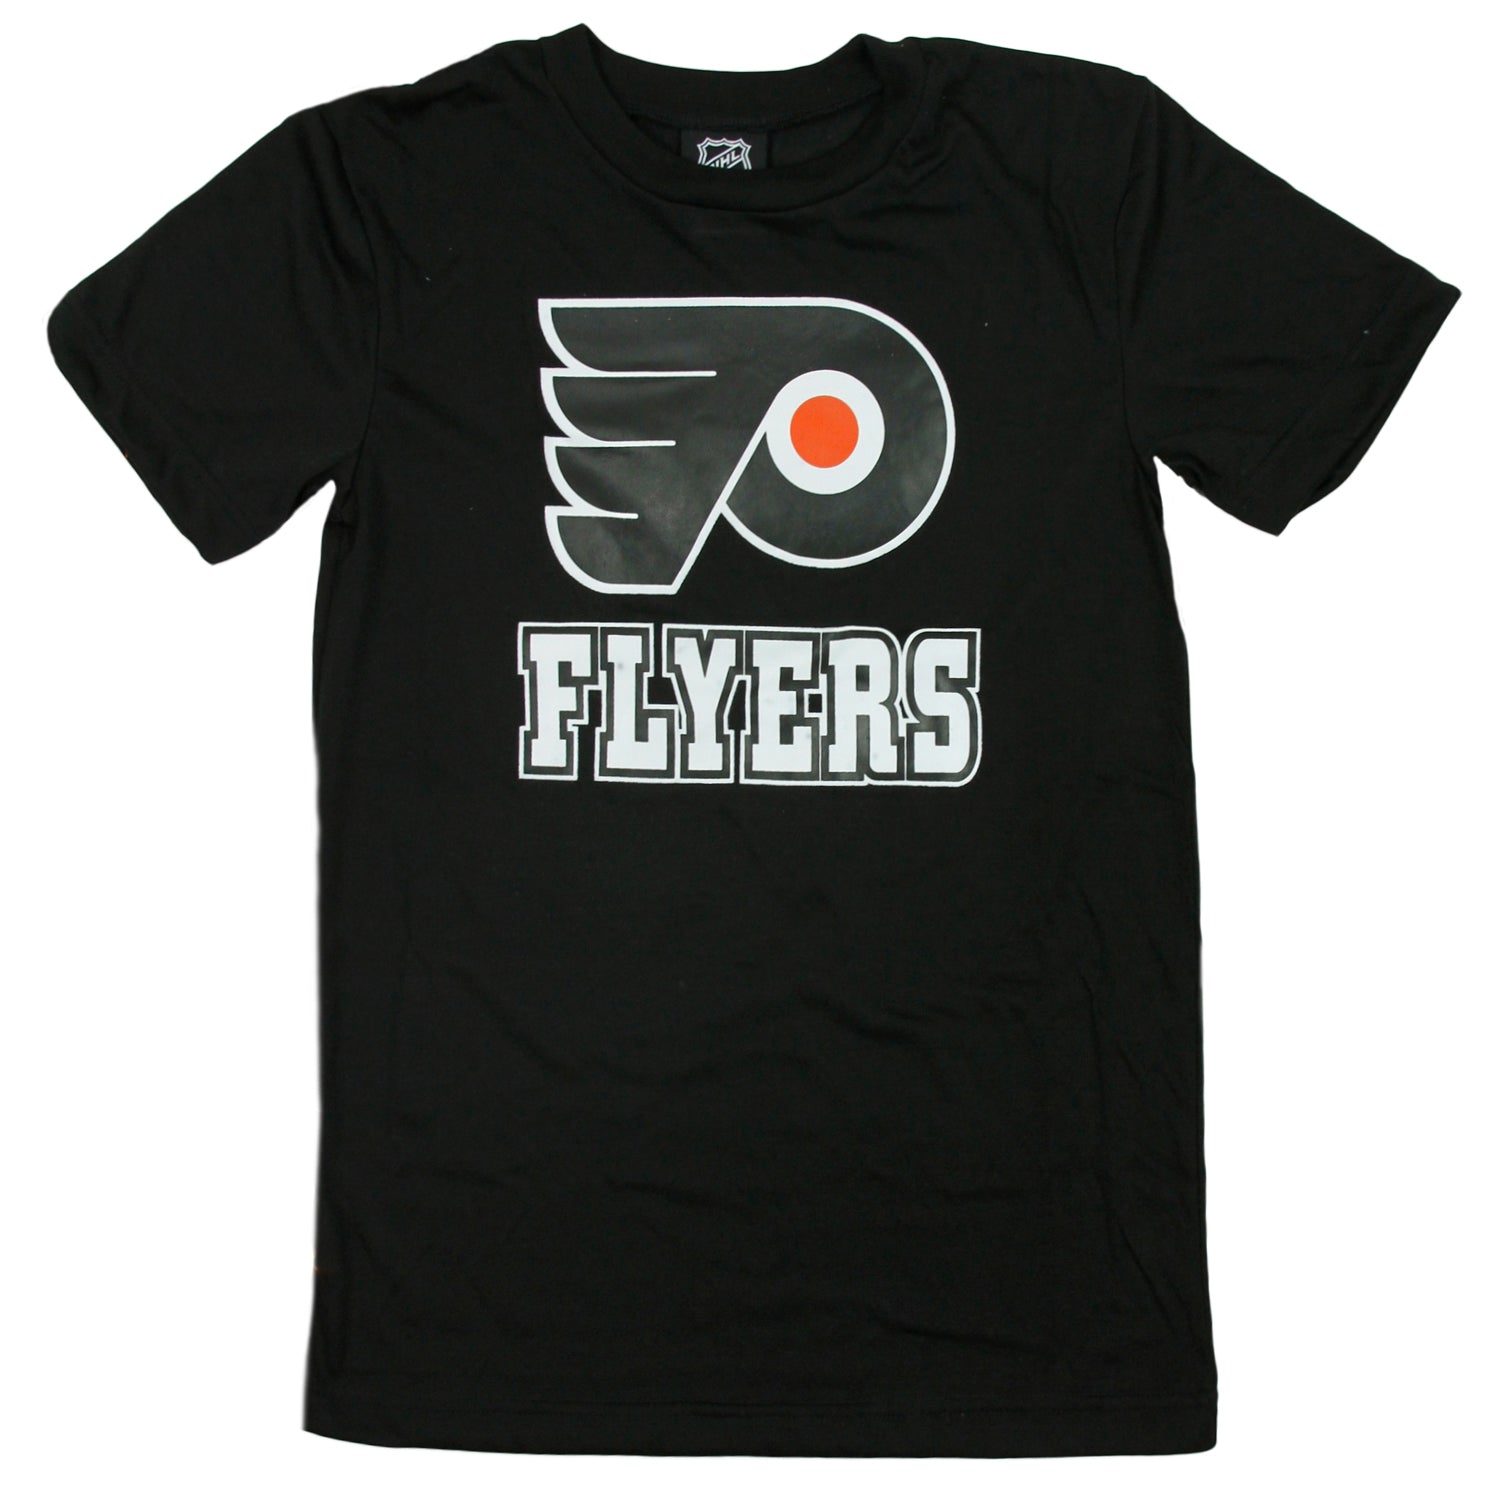 Philadelphia Flyers Hockey Jogger Pants - S / Black / Polyester